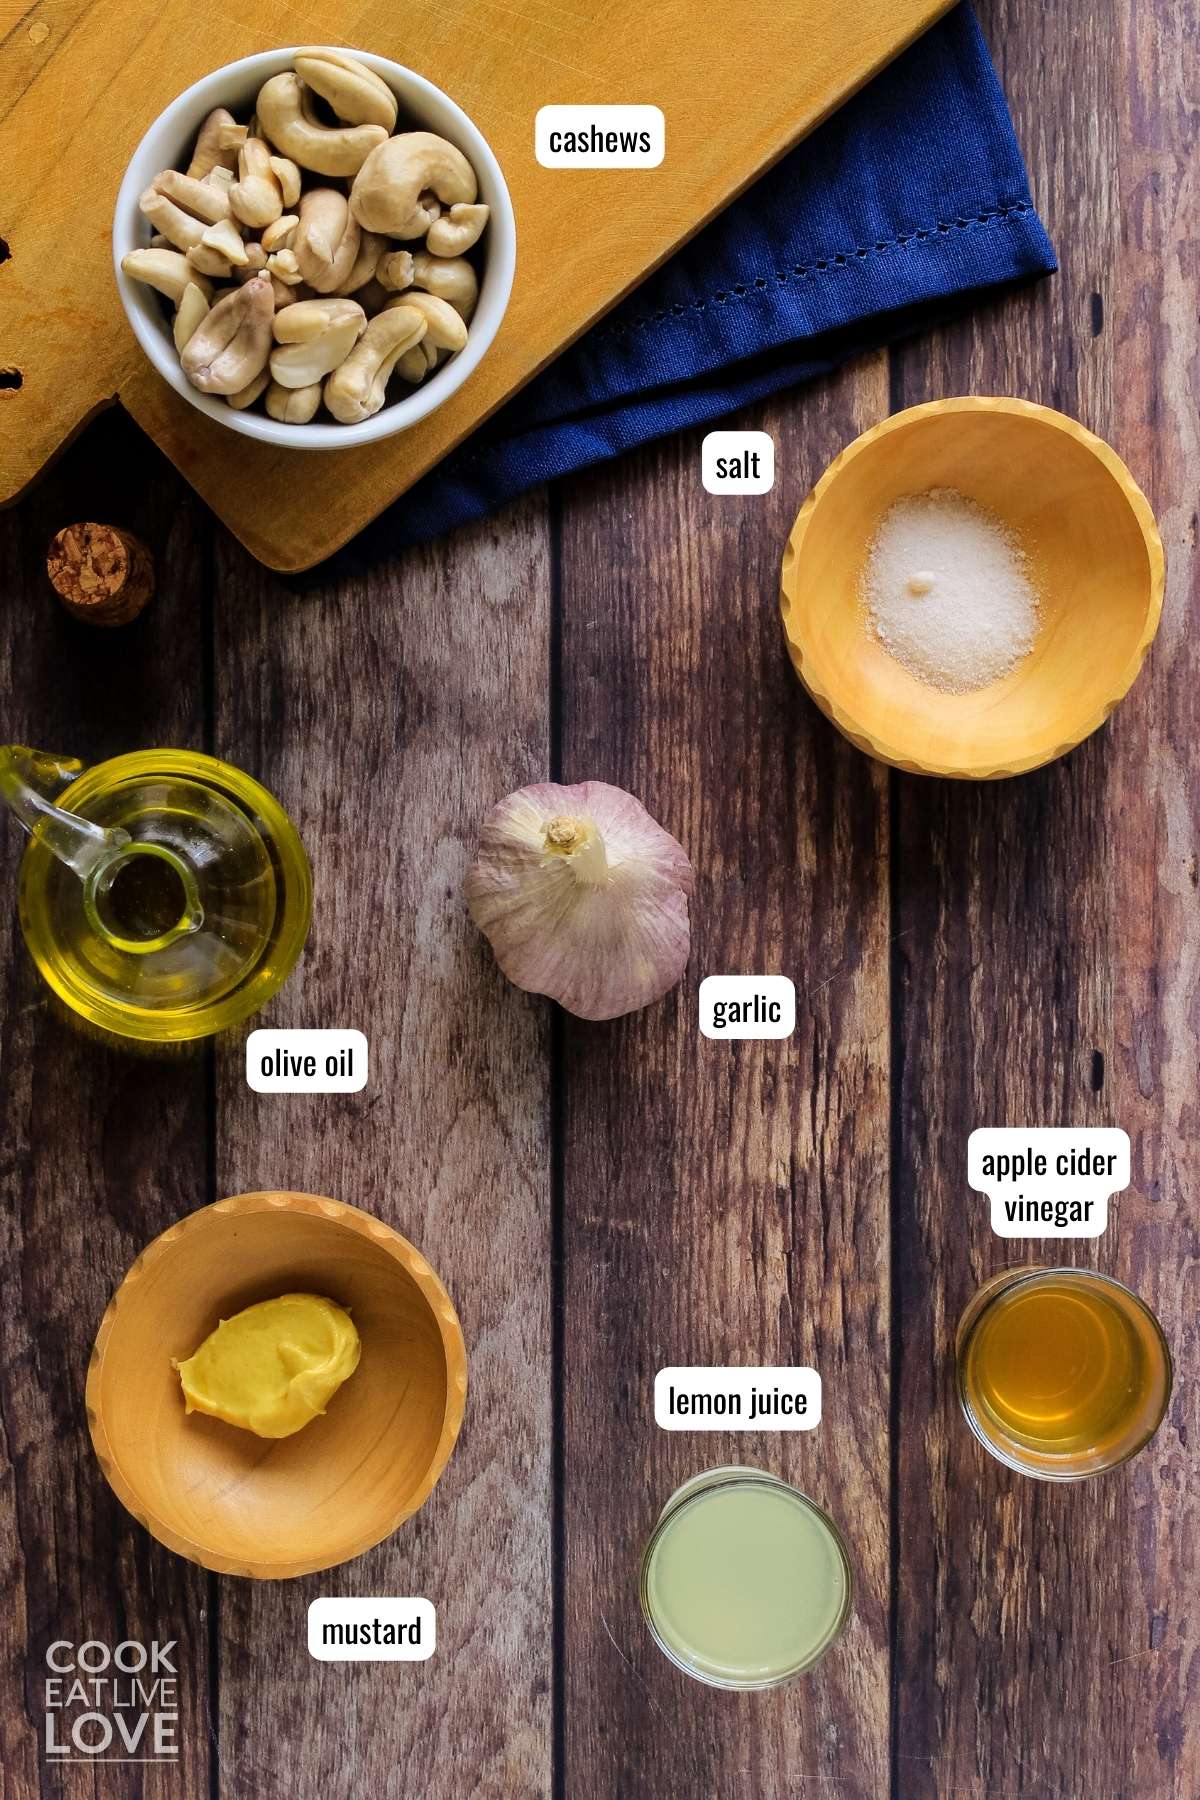 Ingredients to make vegan garlic aioli sauce on the table before mixing.